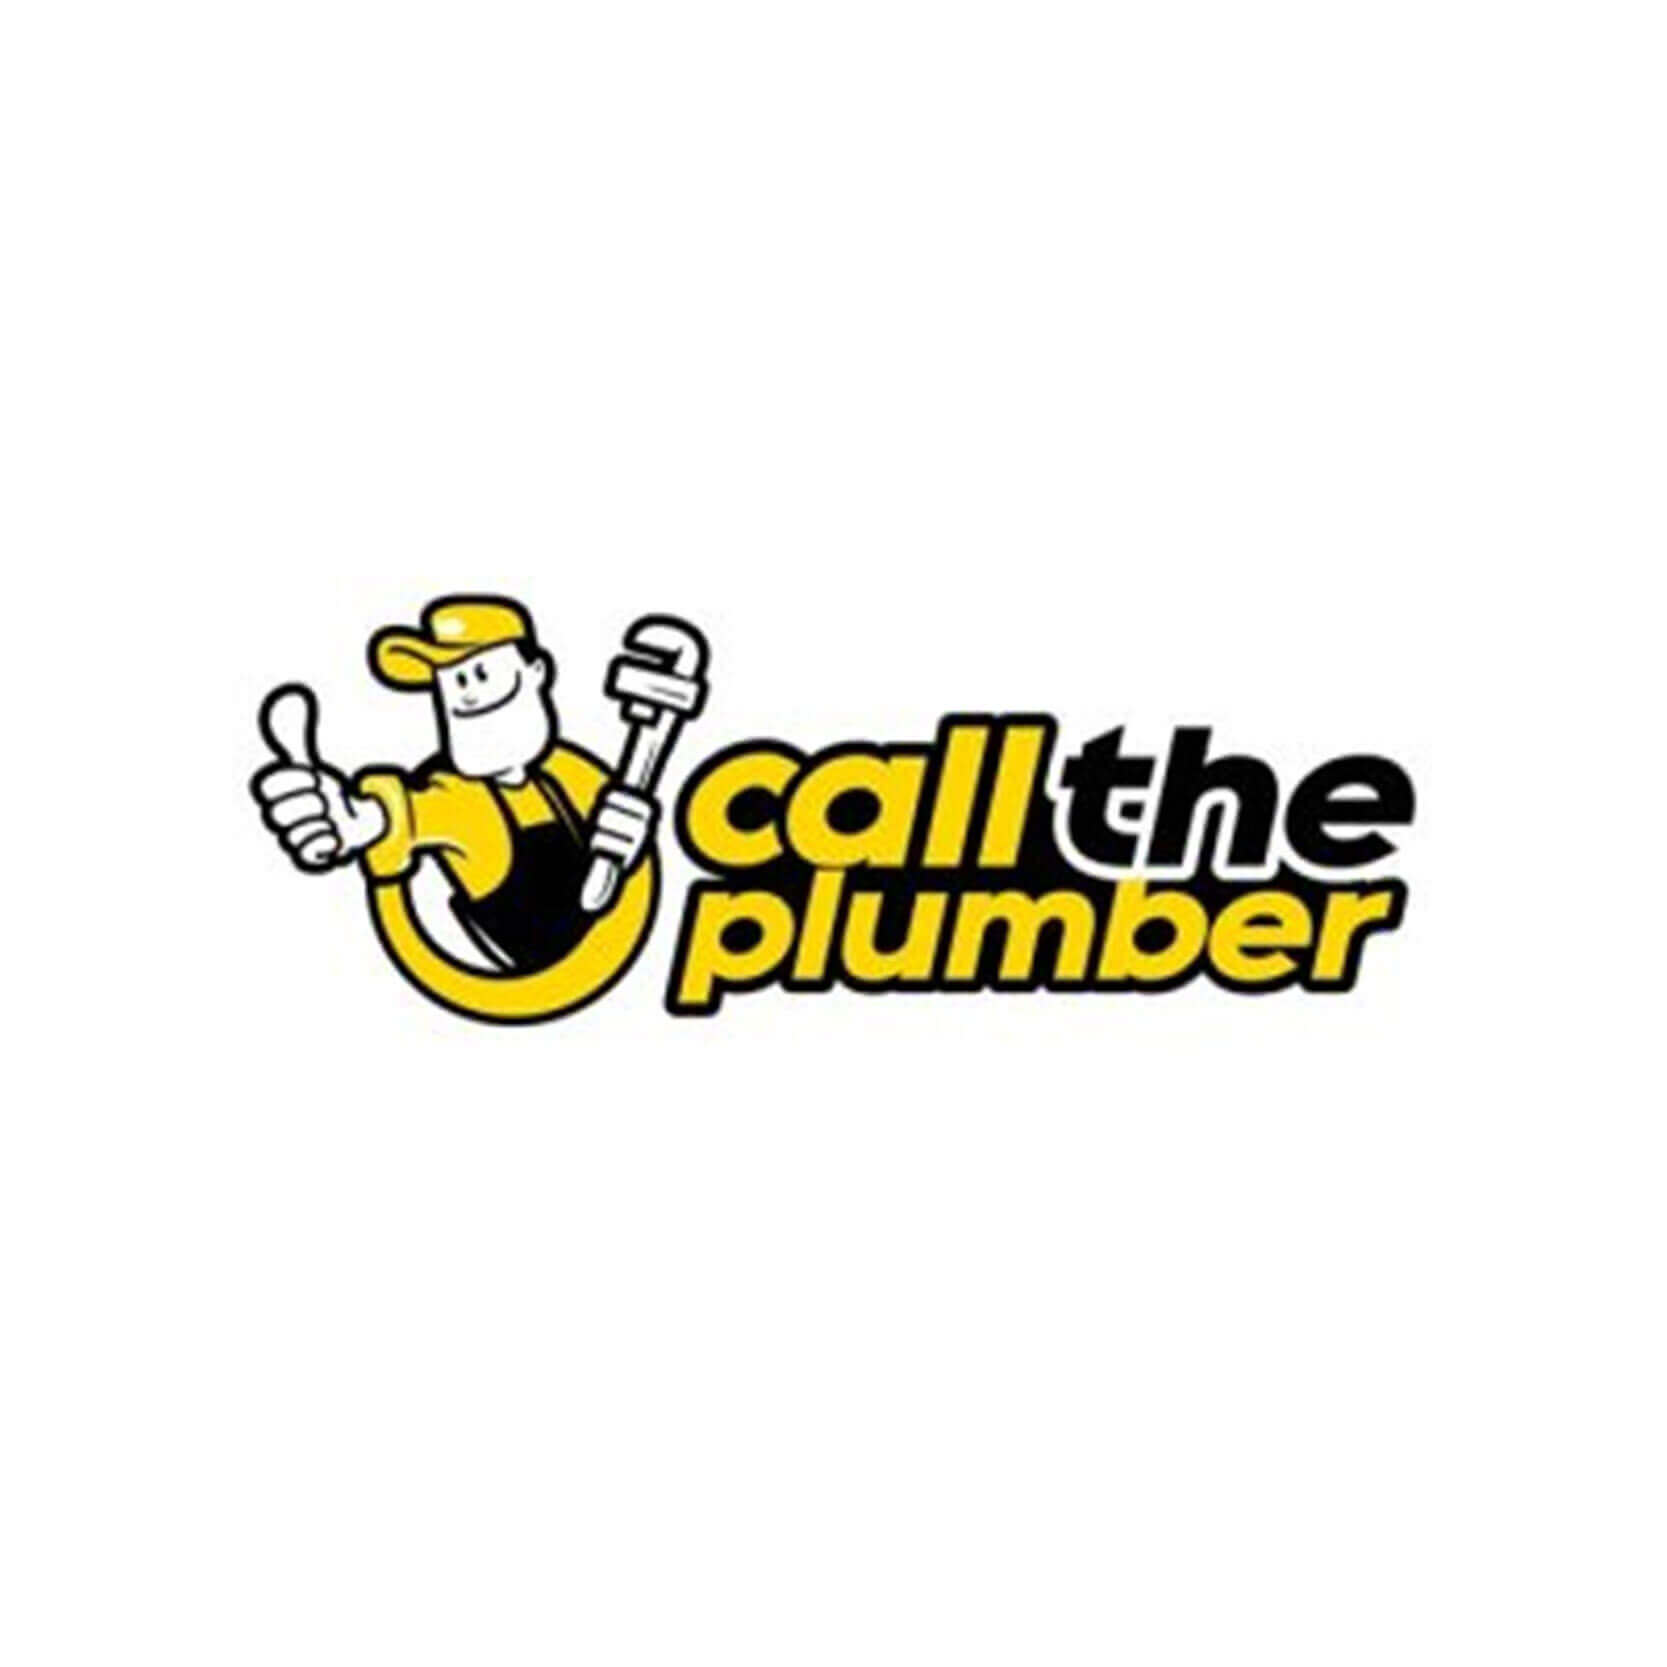 call the plumber wordmark logo by the evolving digital's